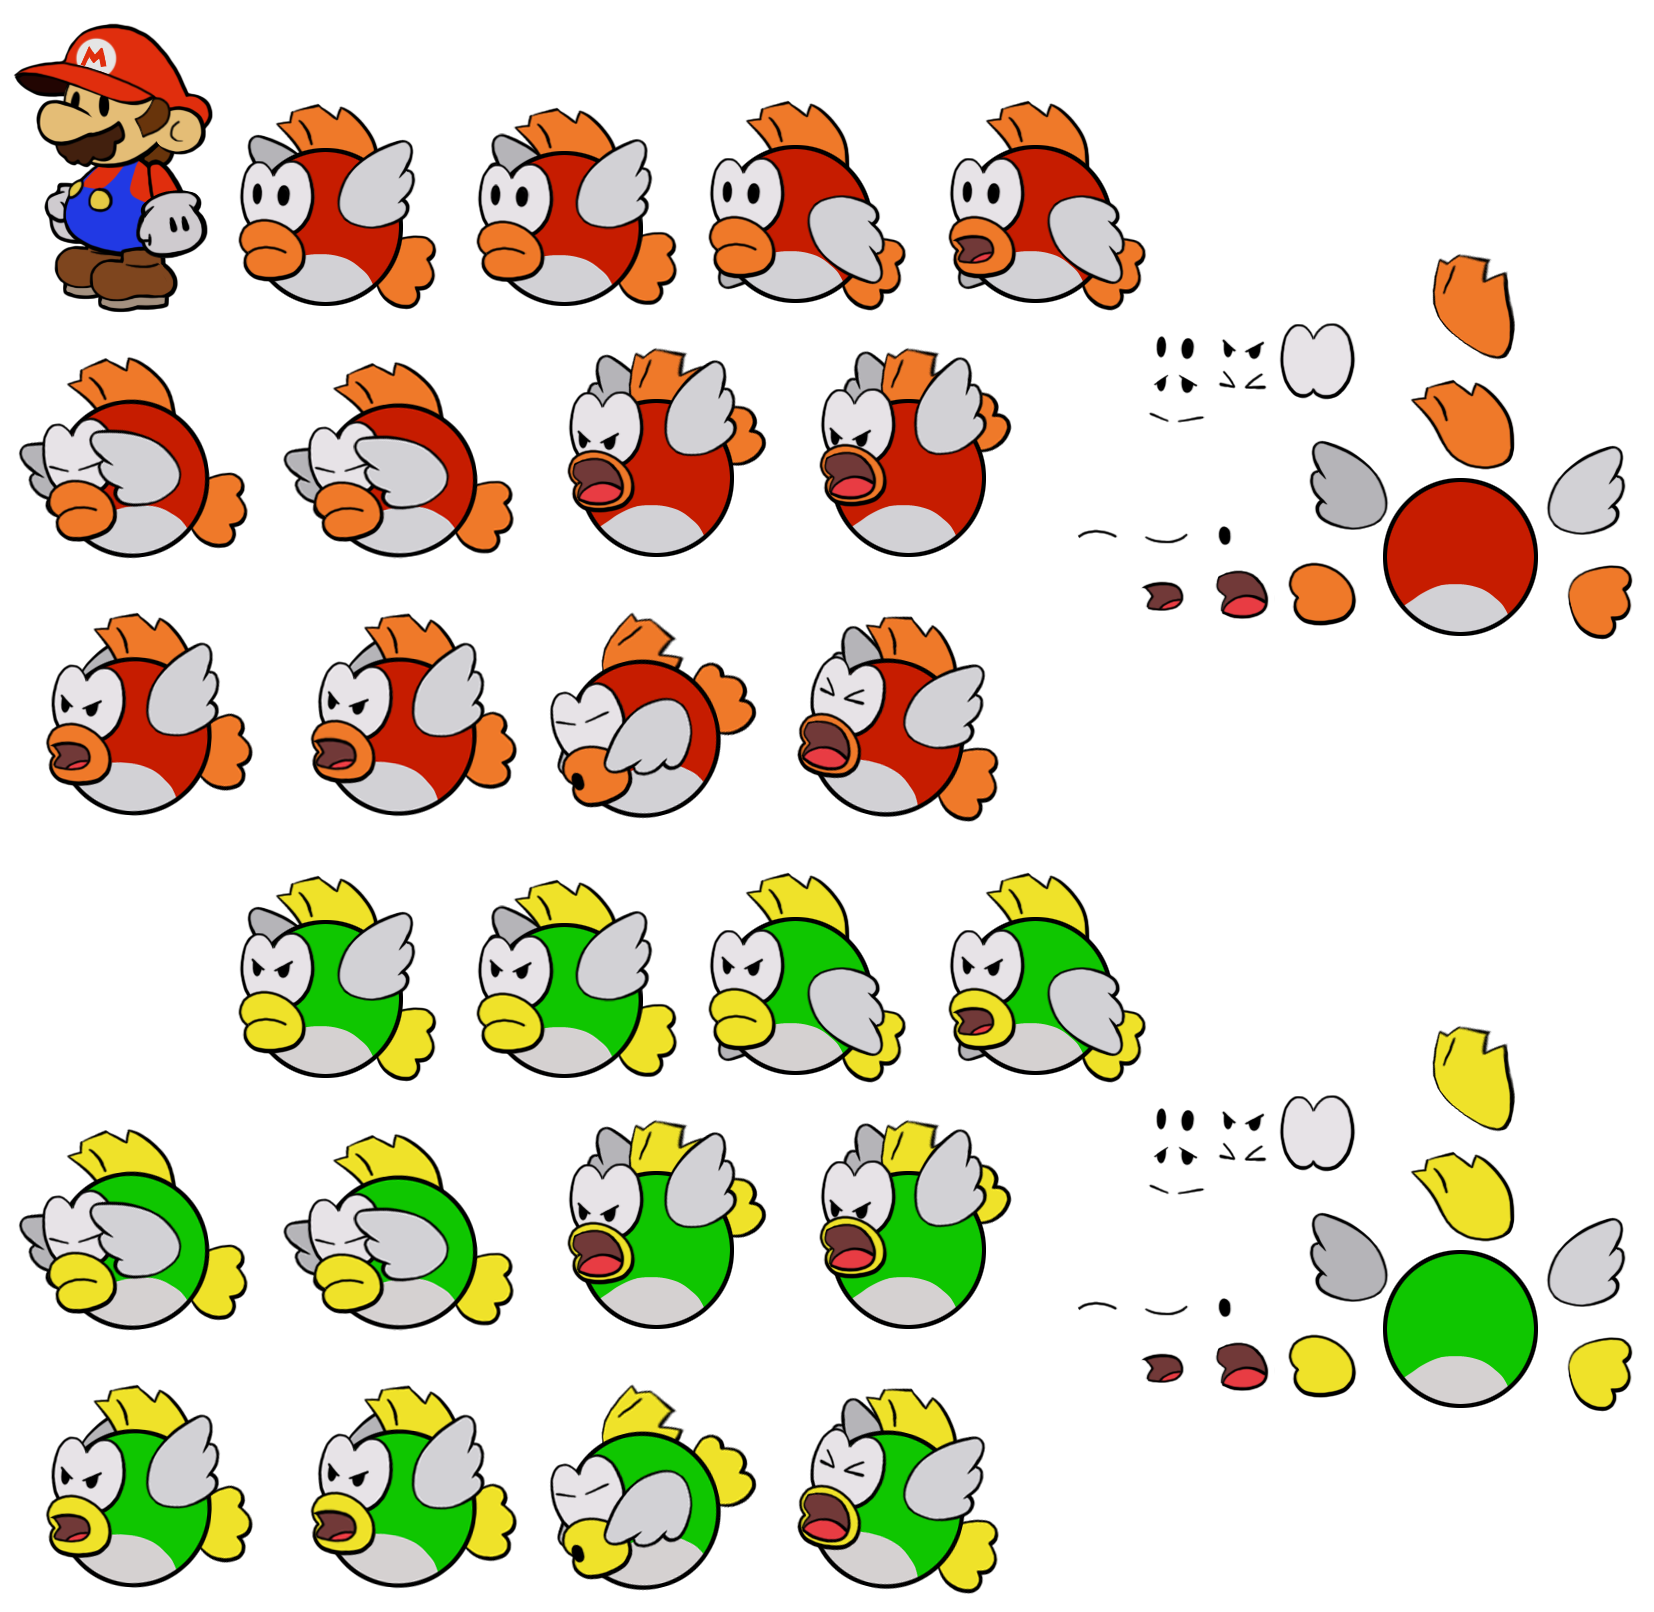 Cheep Cheeps (Paper Mario-Style)